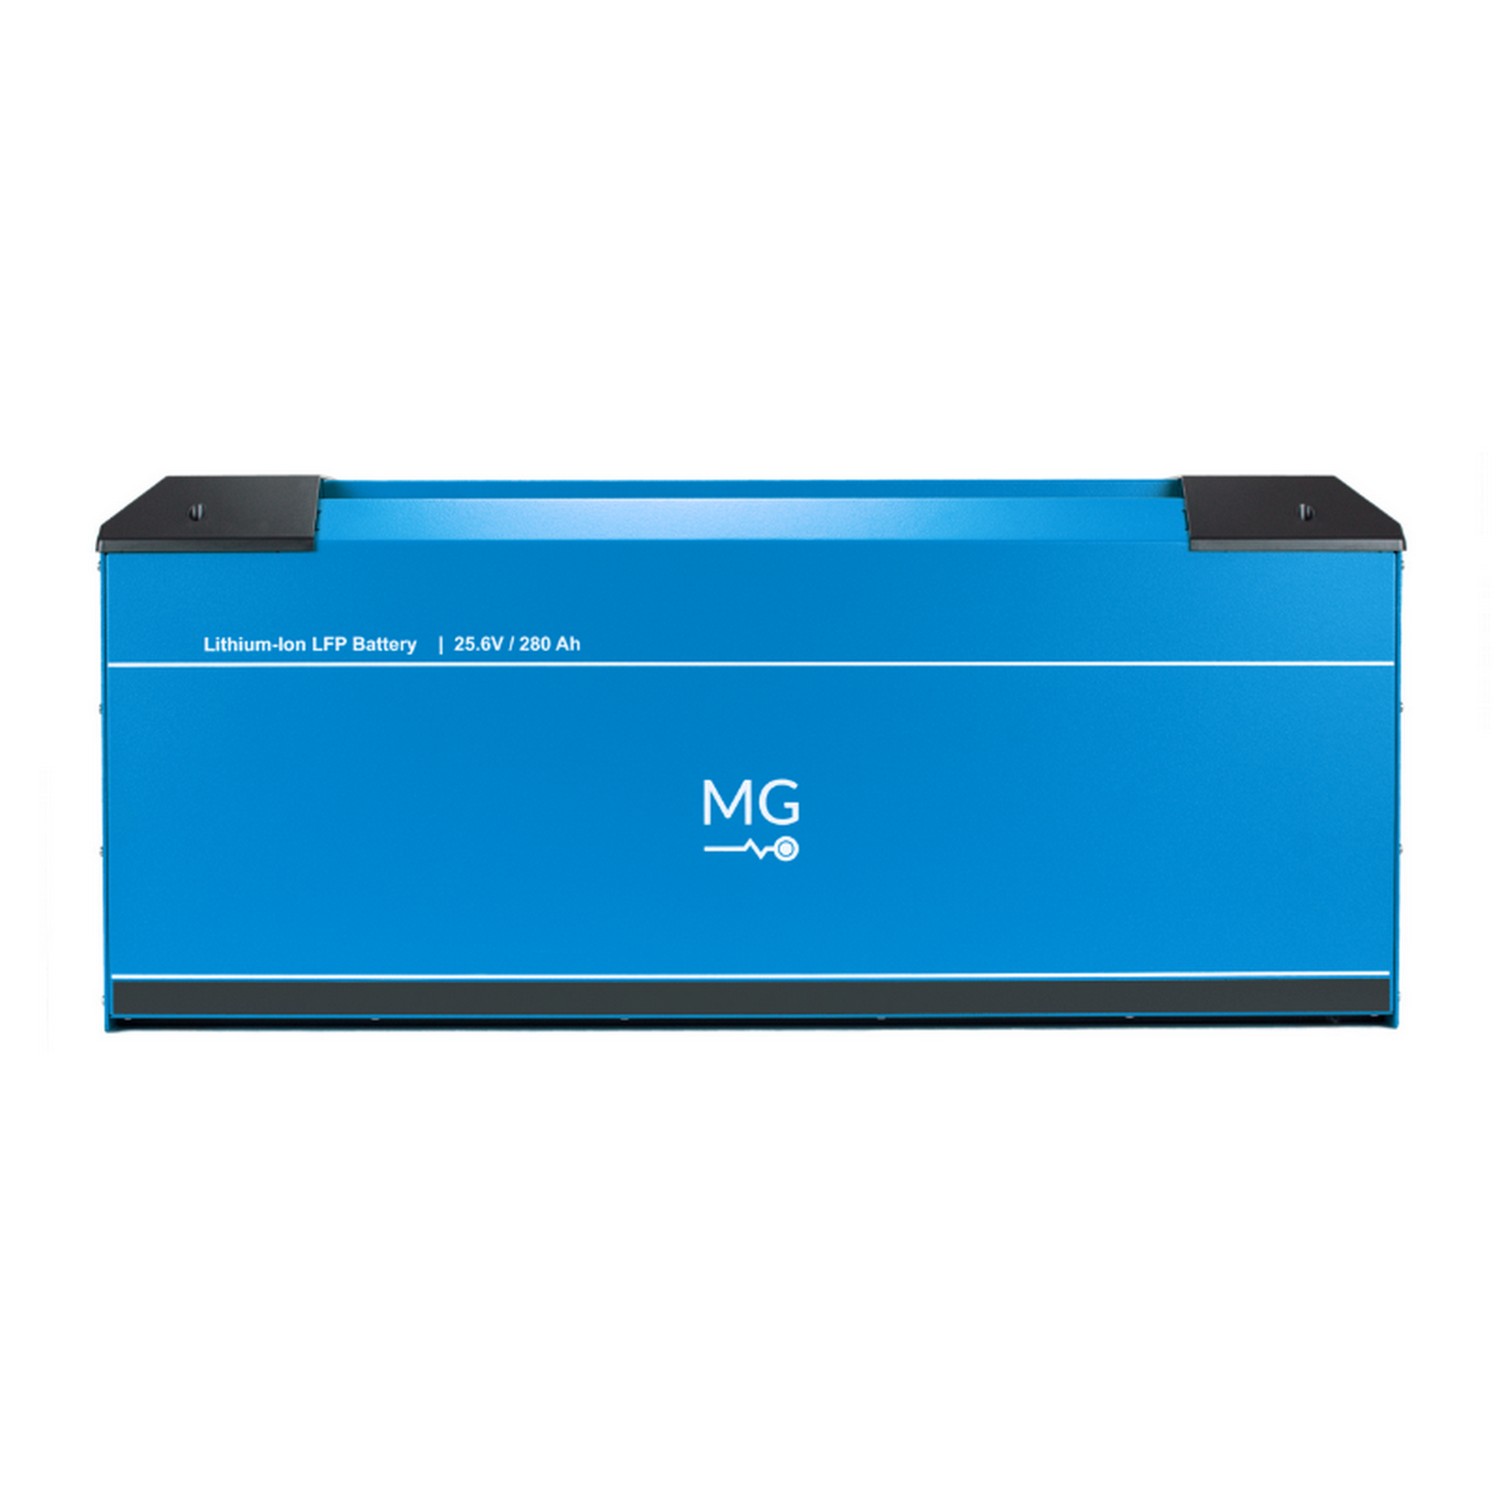 Литий-ионный аккумулятор MG Energy Systems LFP 280 RJ45 MGLFP240280 Lithium-Ion LiFePO4 25.6В 280Ач 7200Втч 652x294x193мм IP30